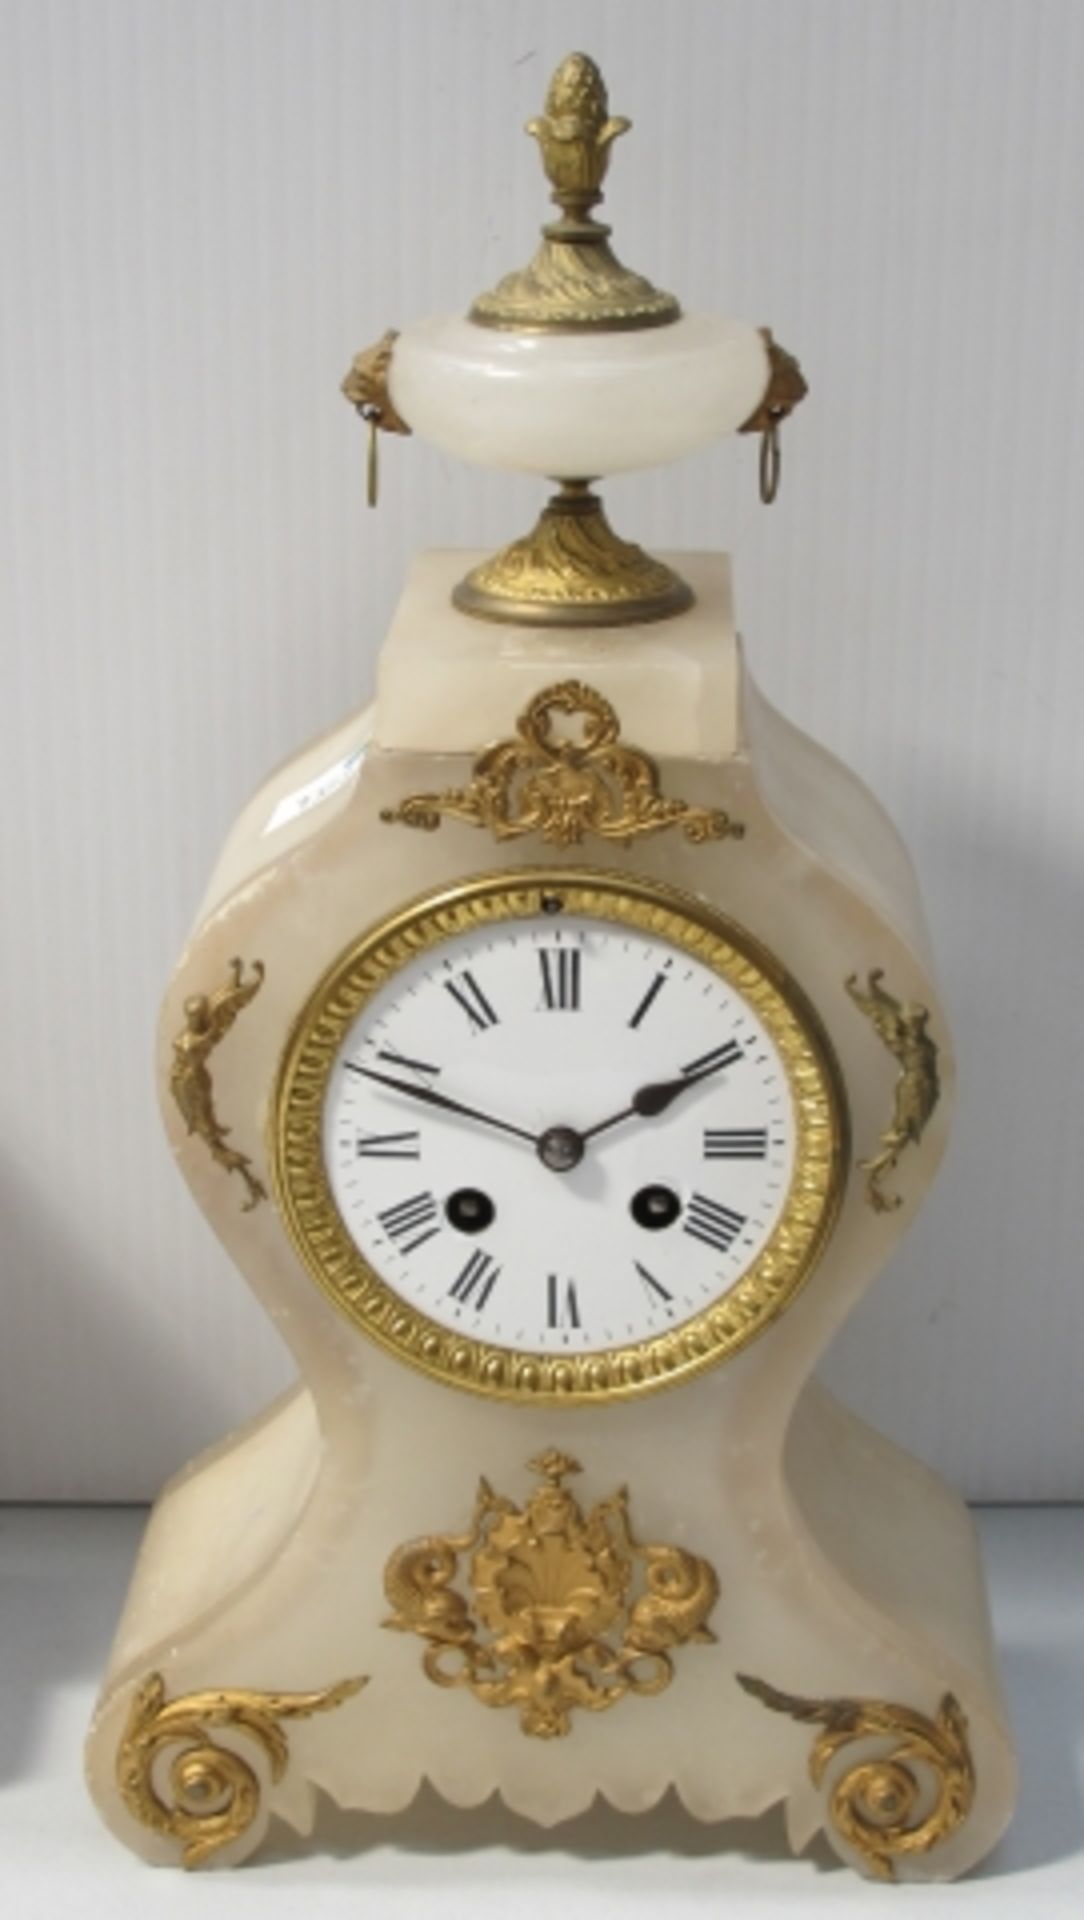 Ormolu mounted ornately shaped marble cased mantel clock 38cm high (est. £50-£80)